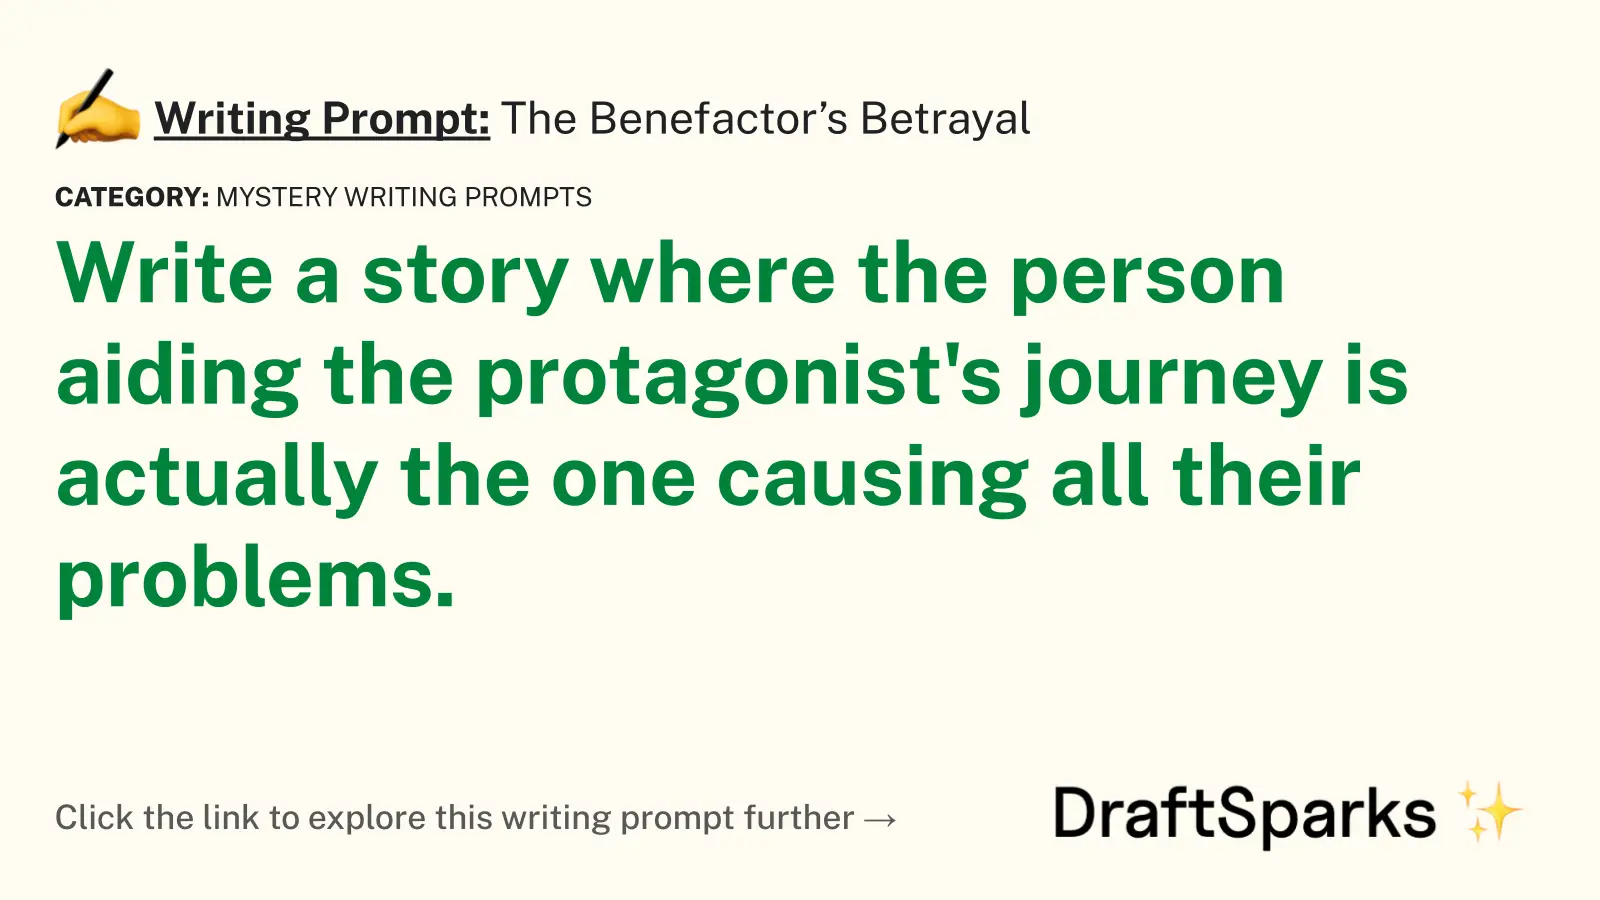 The Benefactor’s Betrayal